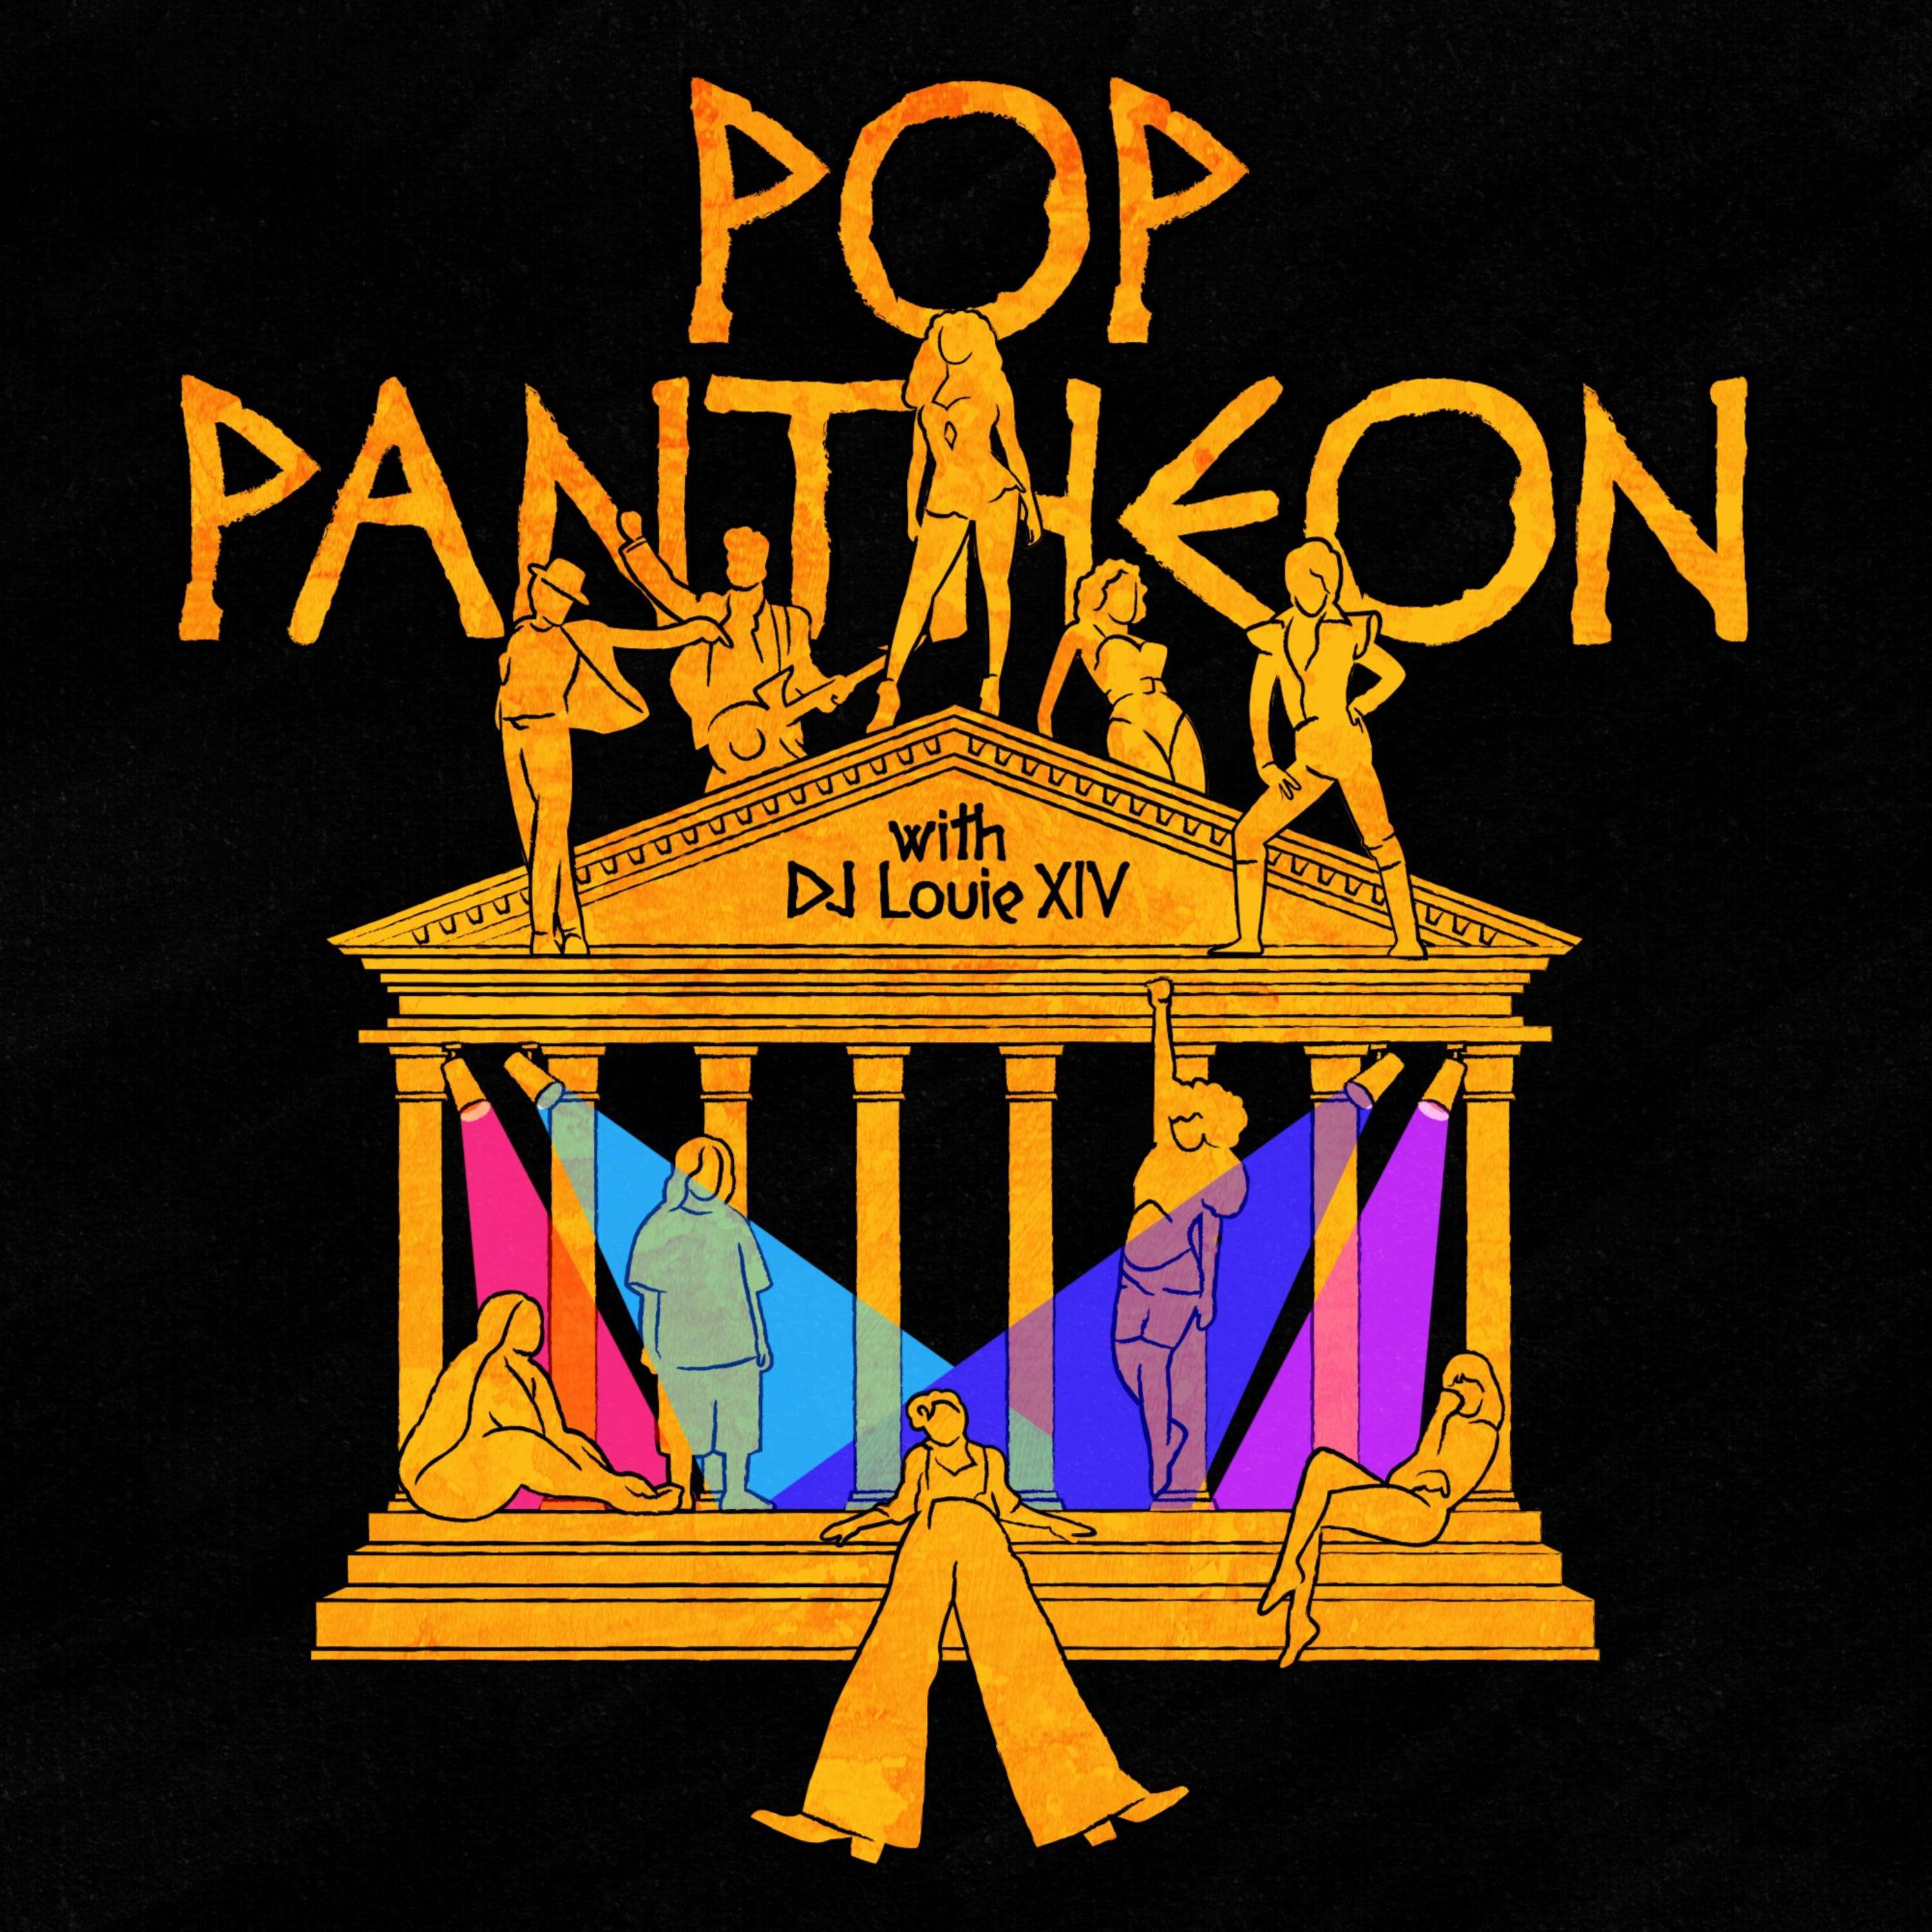 Pop Pantheon podcast show image